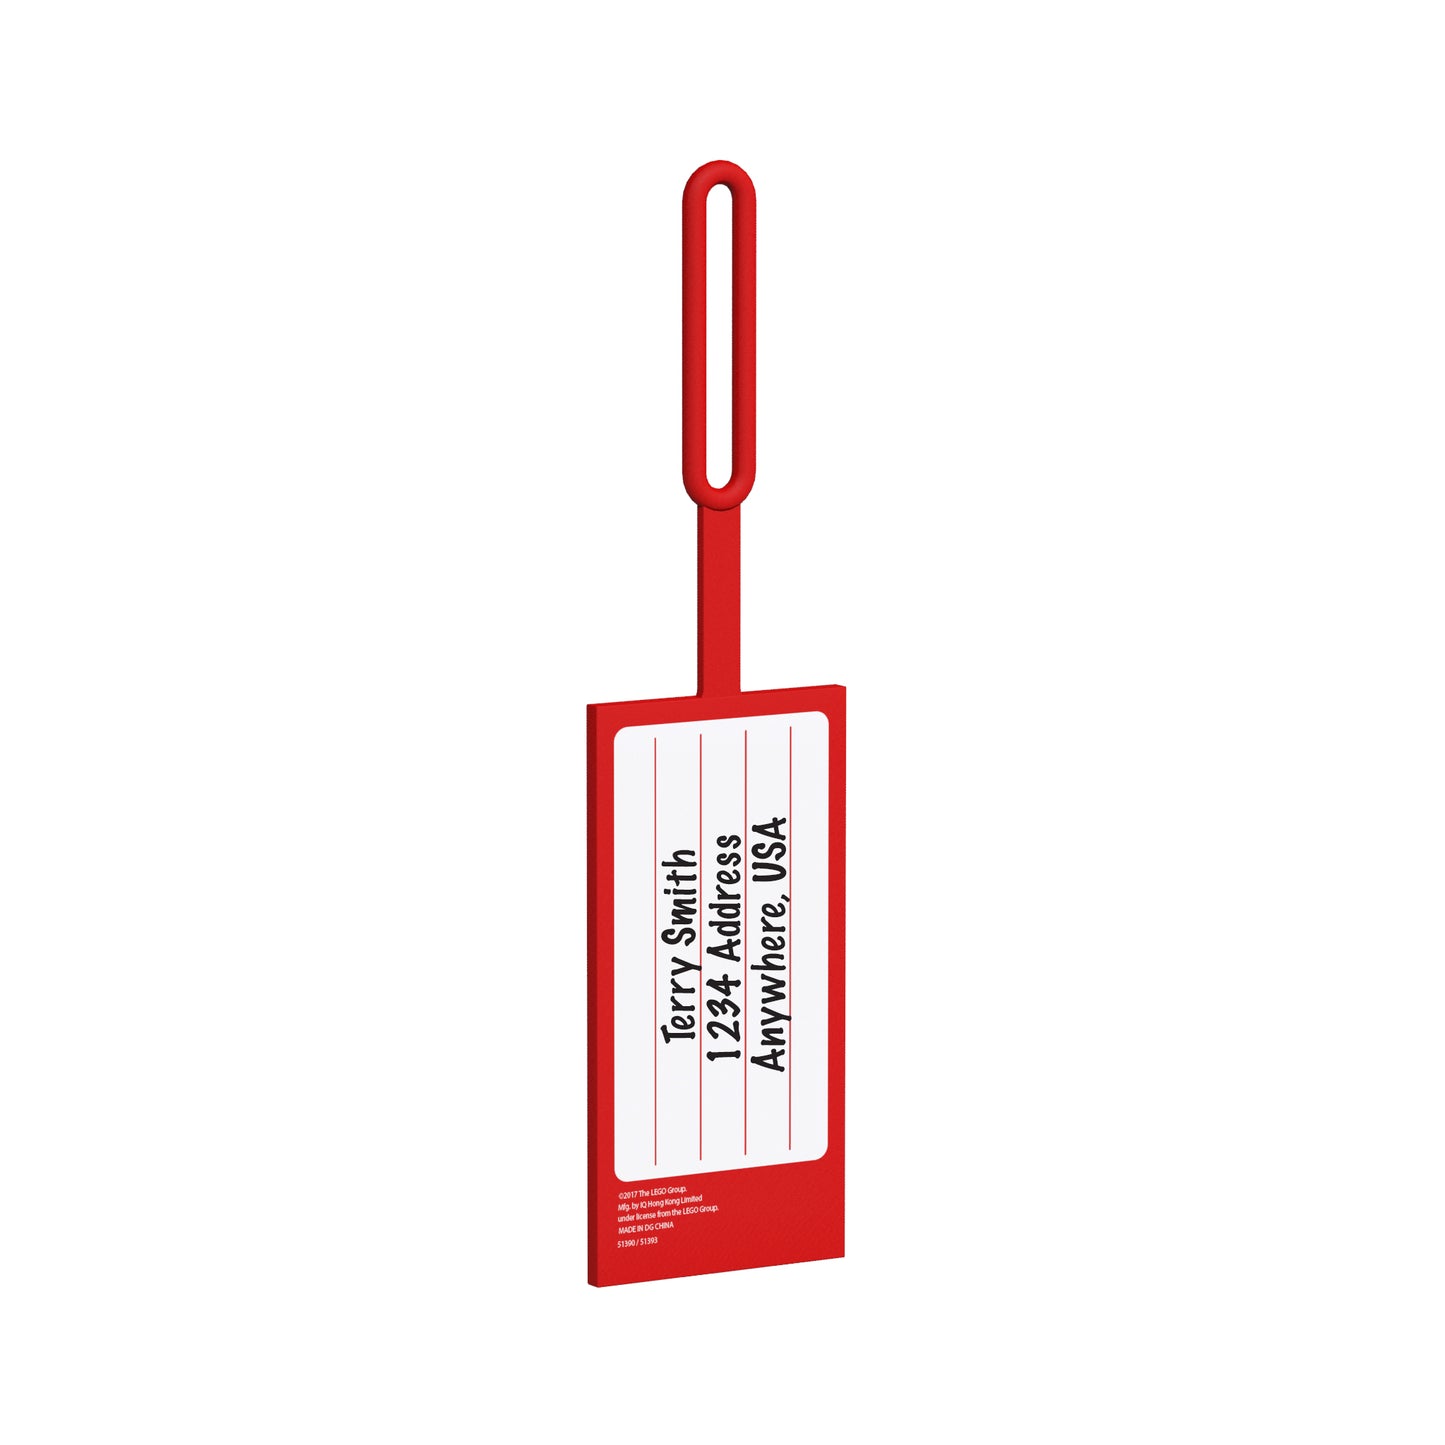 IQ 樂高 經典系列 紅色2x4樂高顆粒 造型吊牌 (52002)